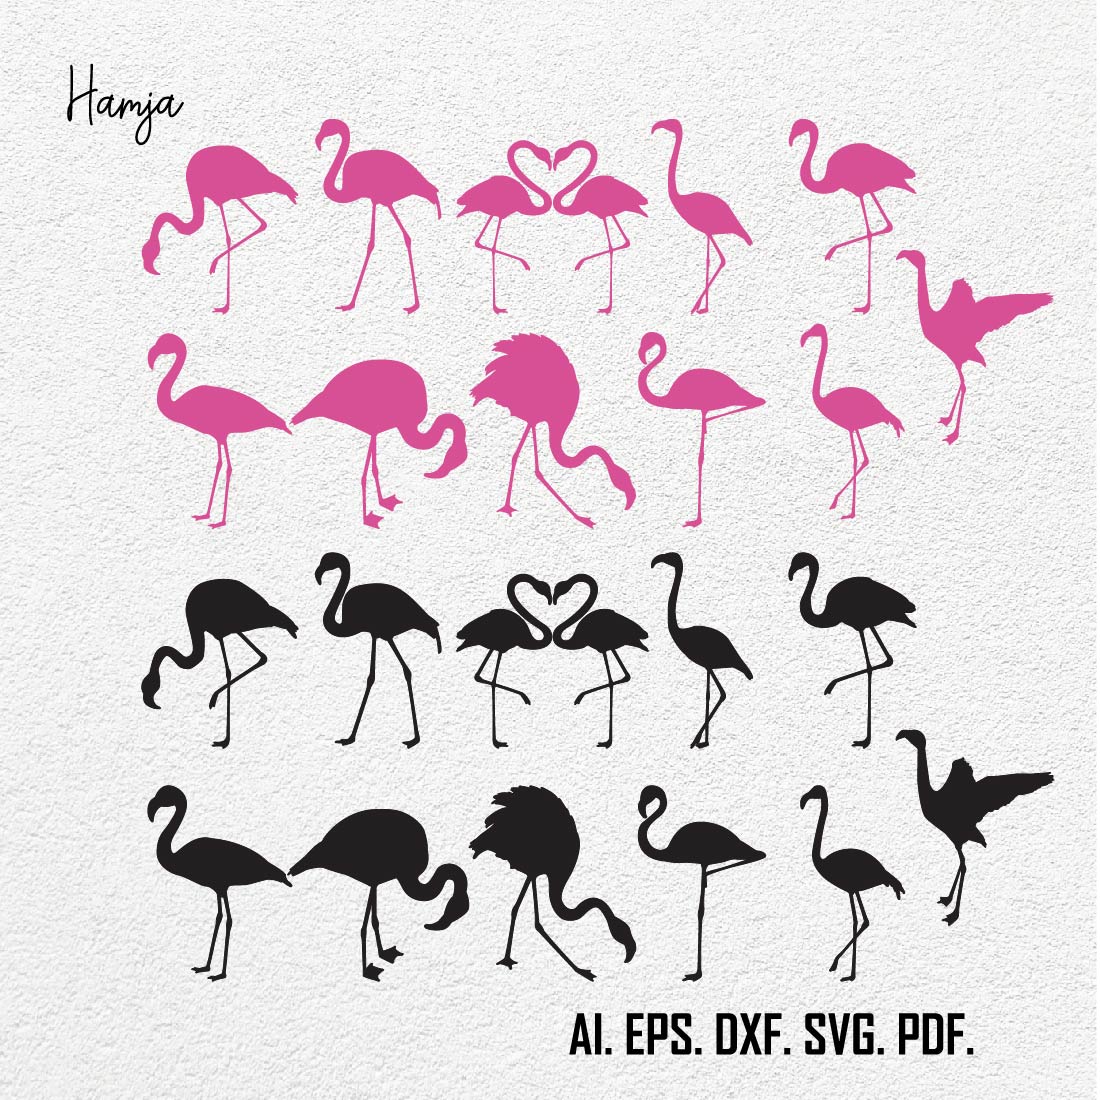 Flamingo SVG | Bird SVG | Flamingo SVG Bundle | Flamingo Cut File | Flamingo Clipart | Flamingo Silhouette | Bird Cut File | Bird Clipart cover image.